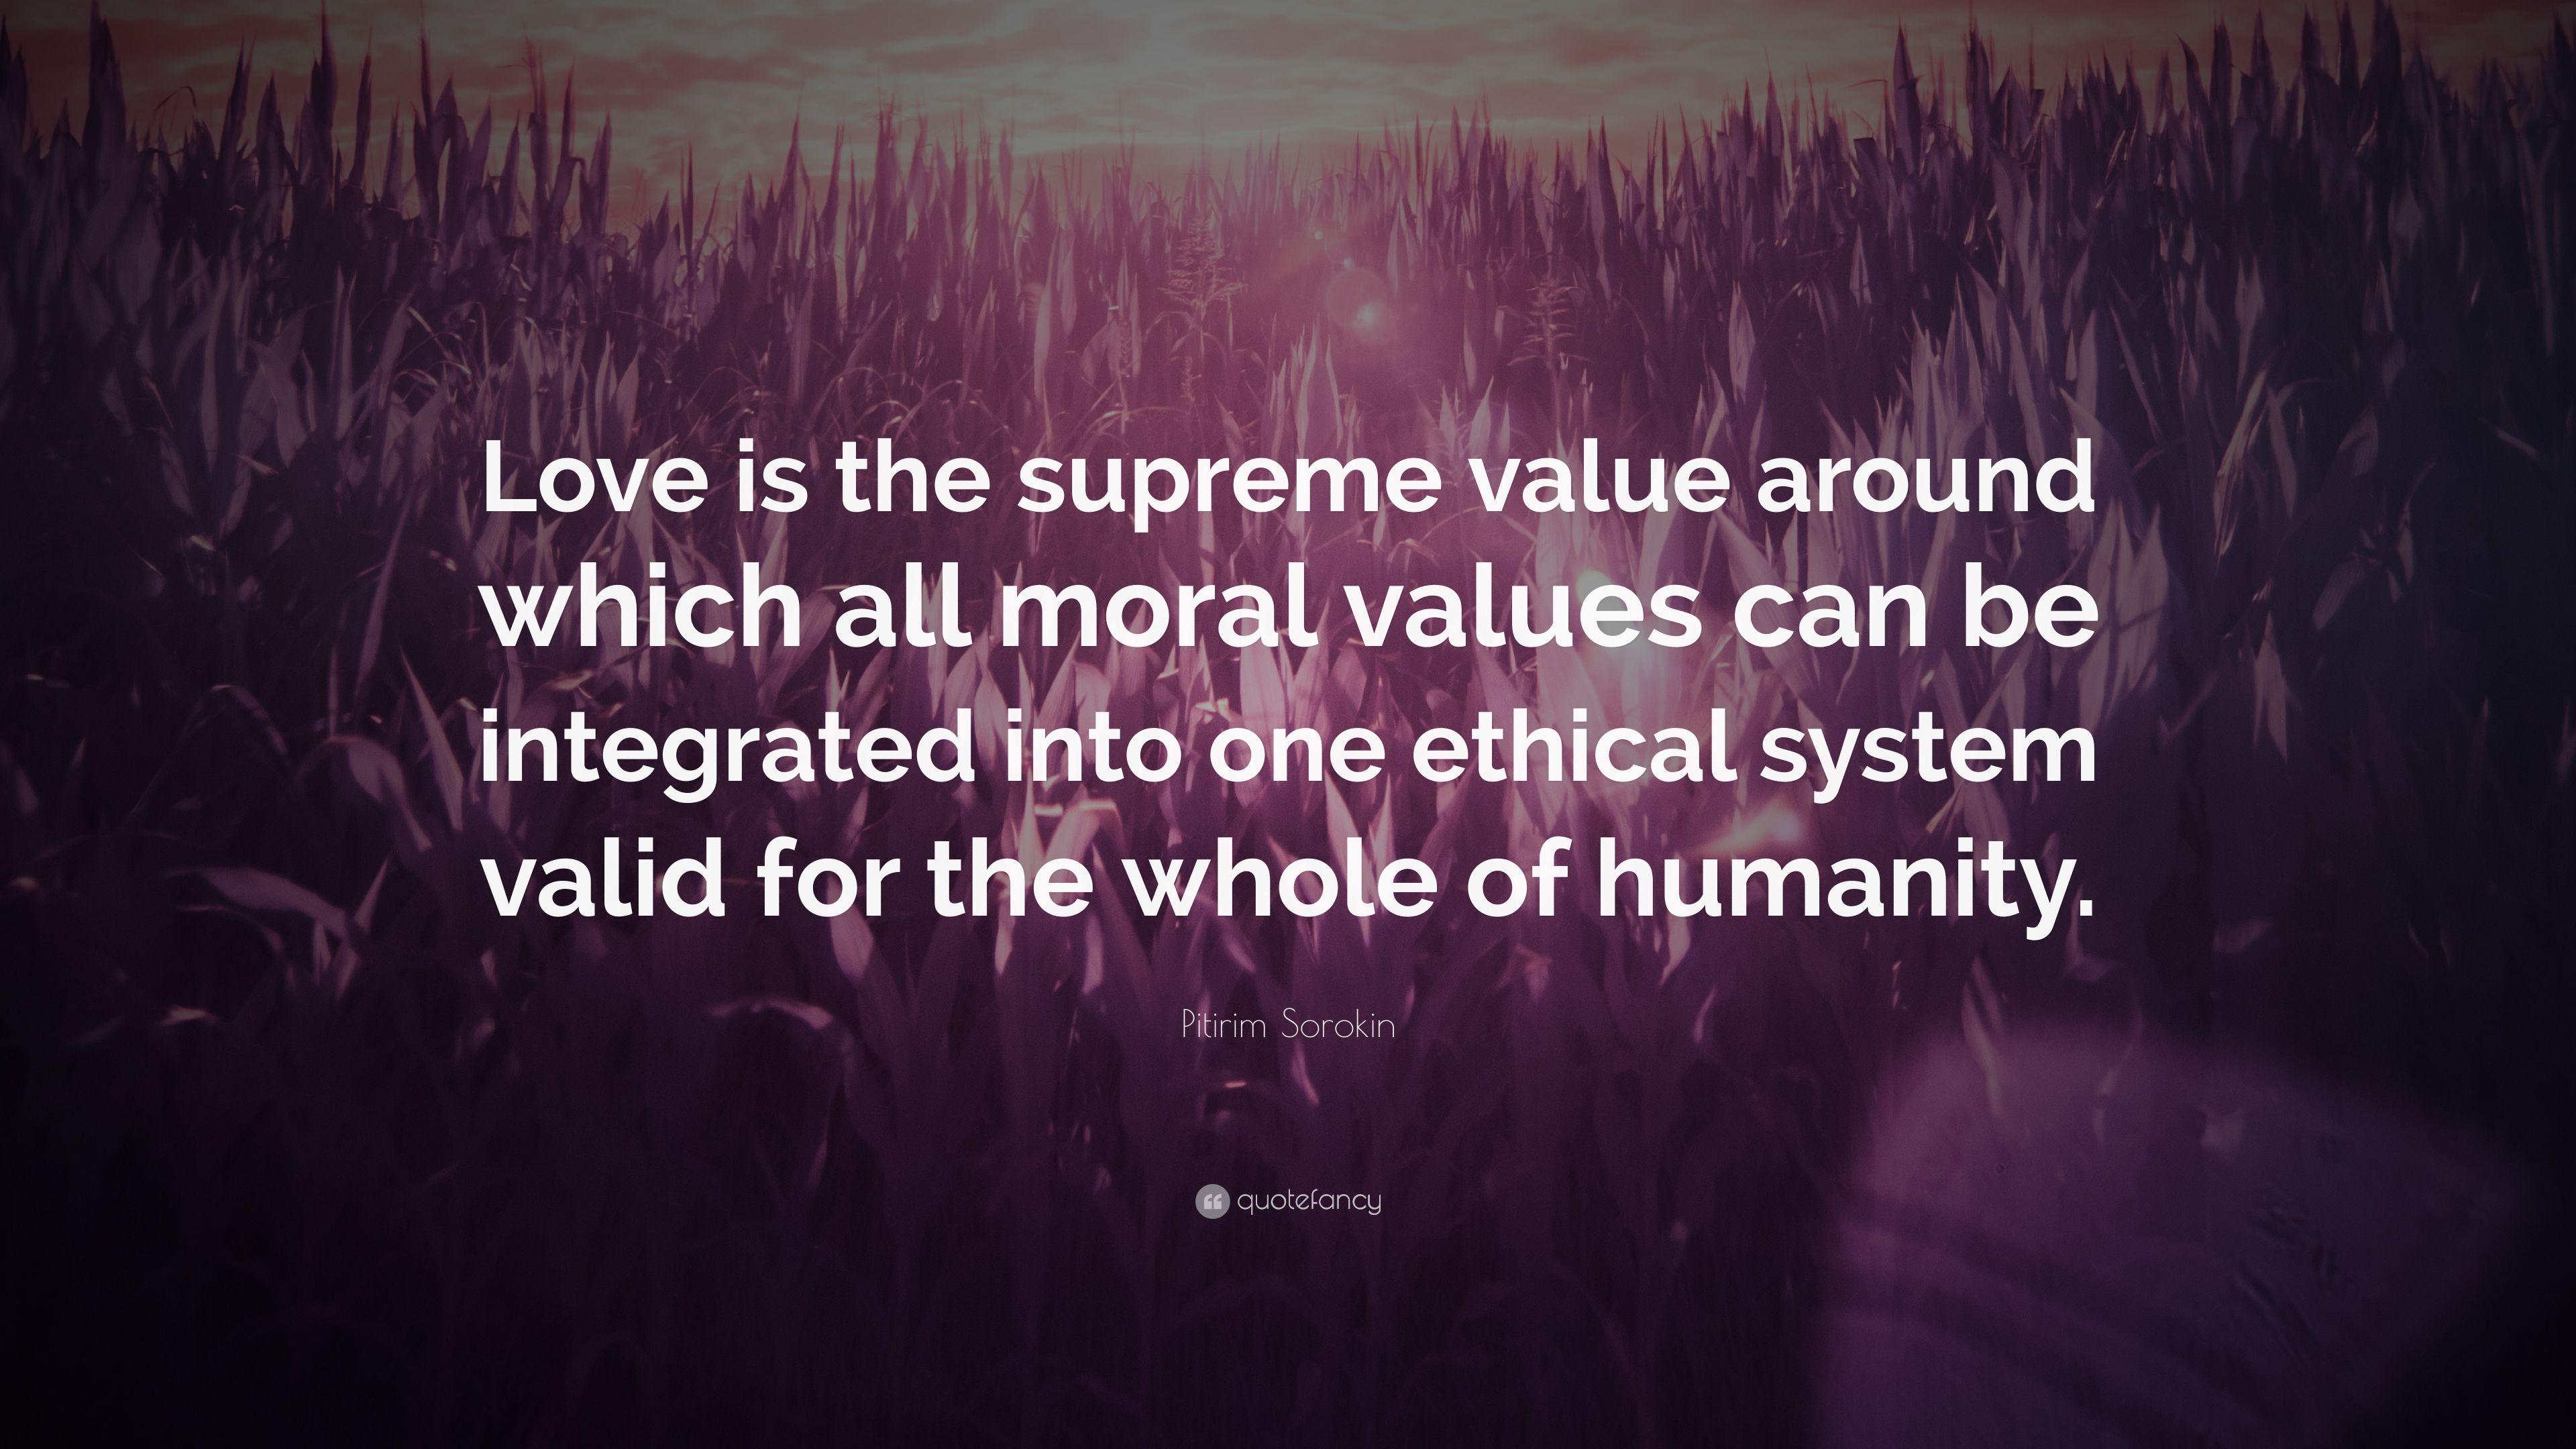 Pitirim Sorokin Quote: “Love is the supreme value around which all